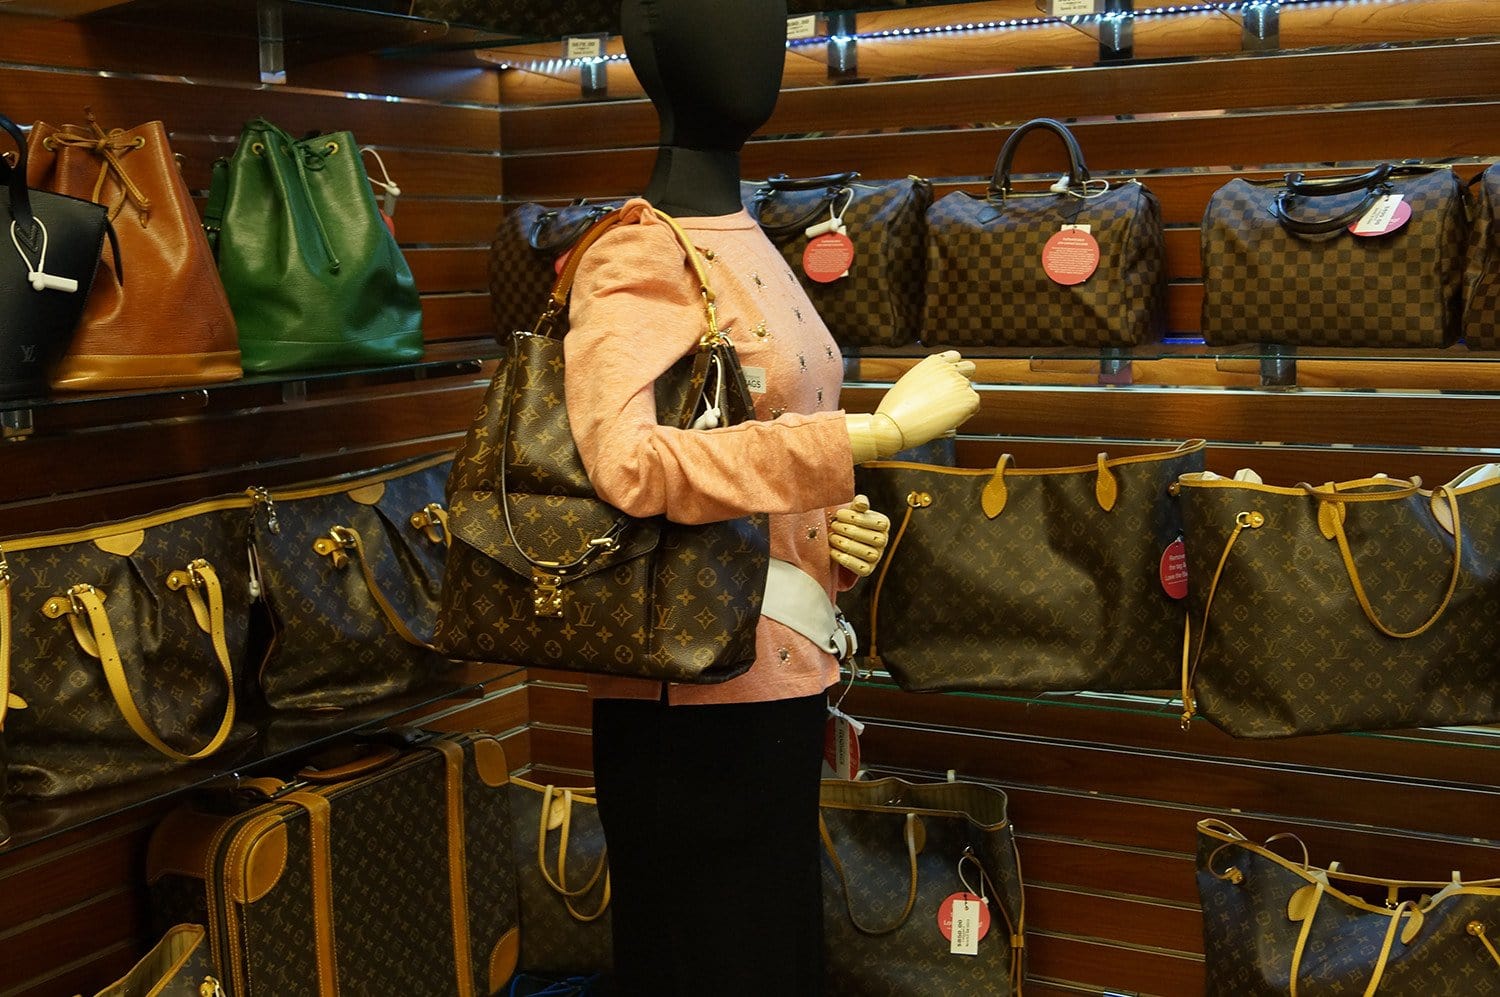 Second Hand Louis Vuitton Bag